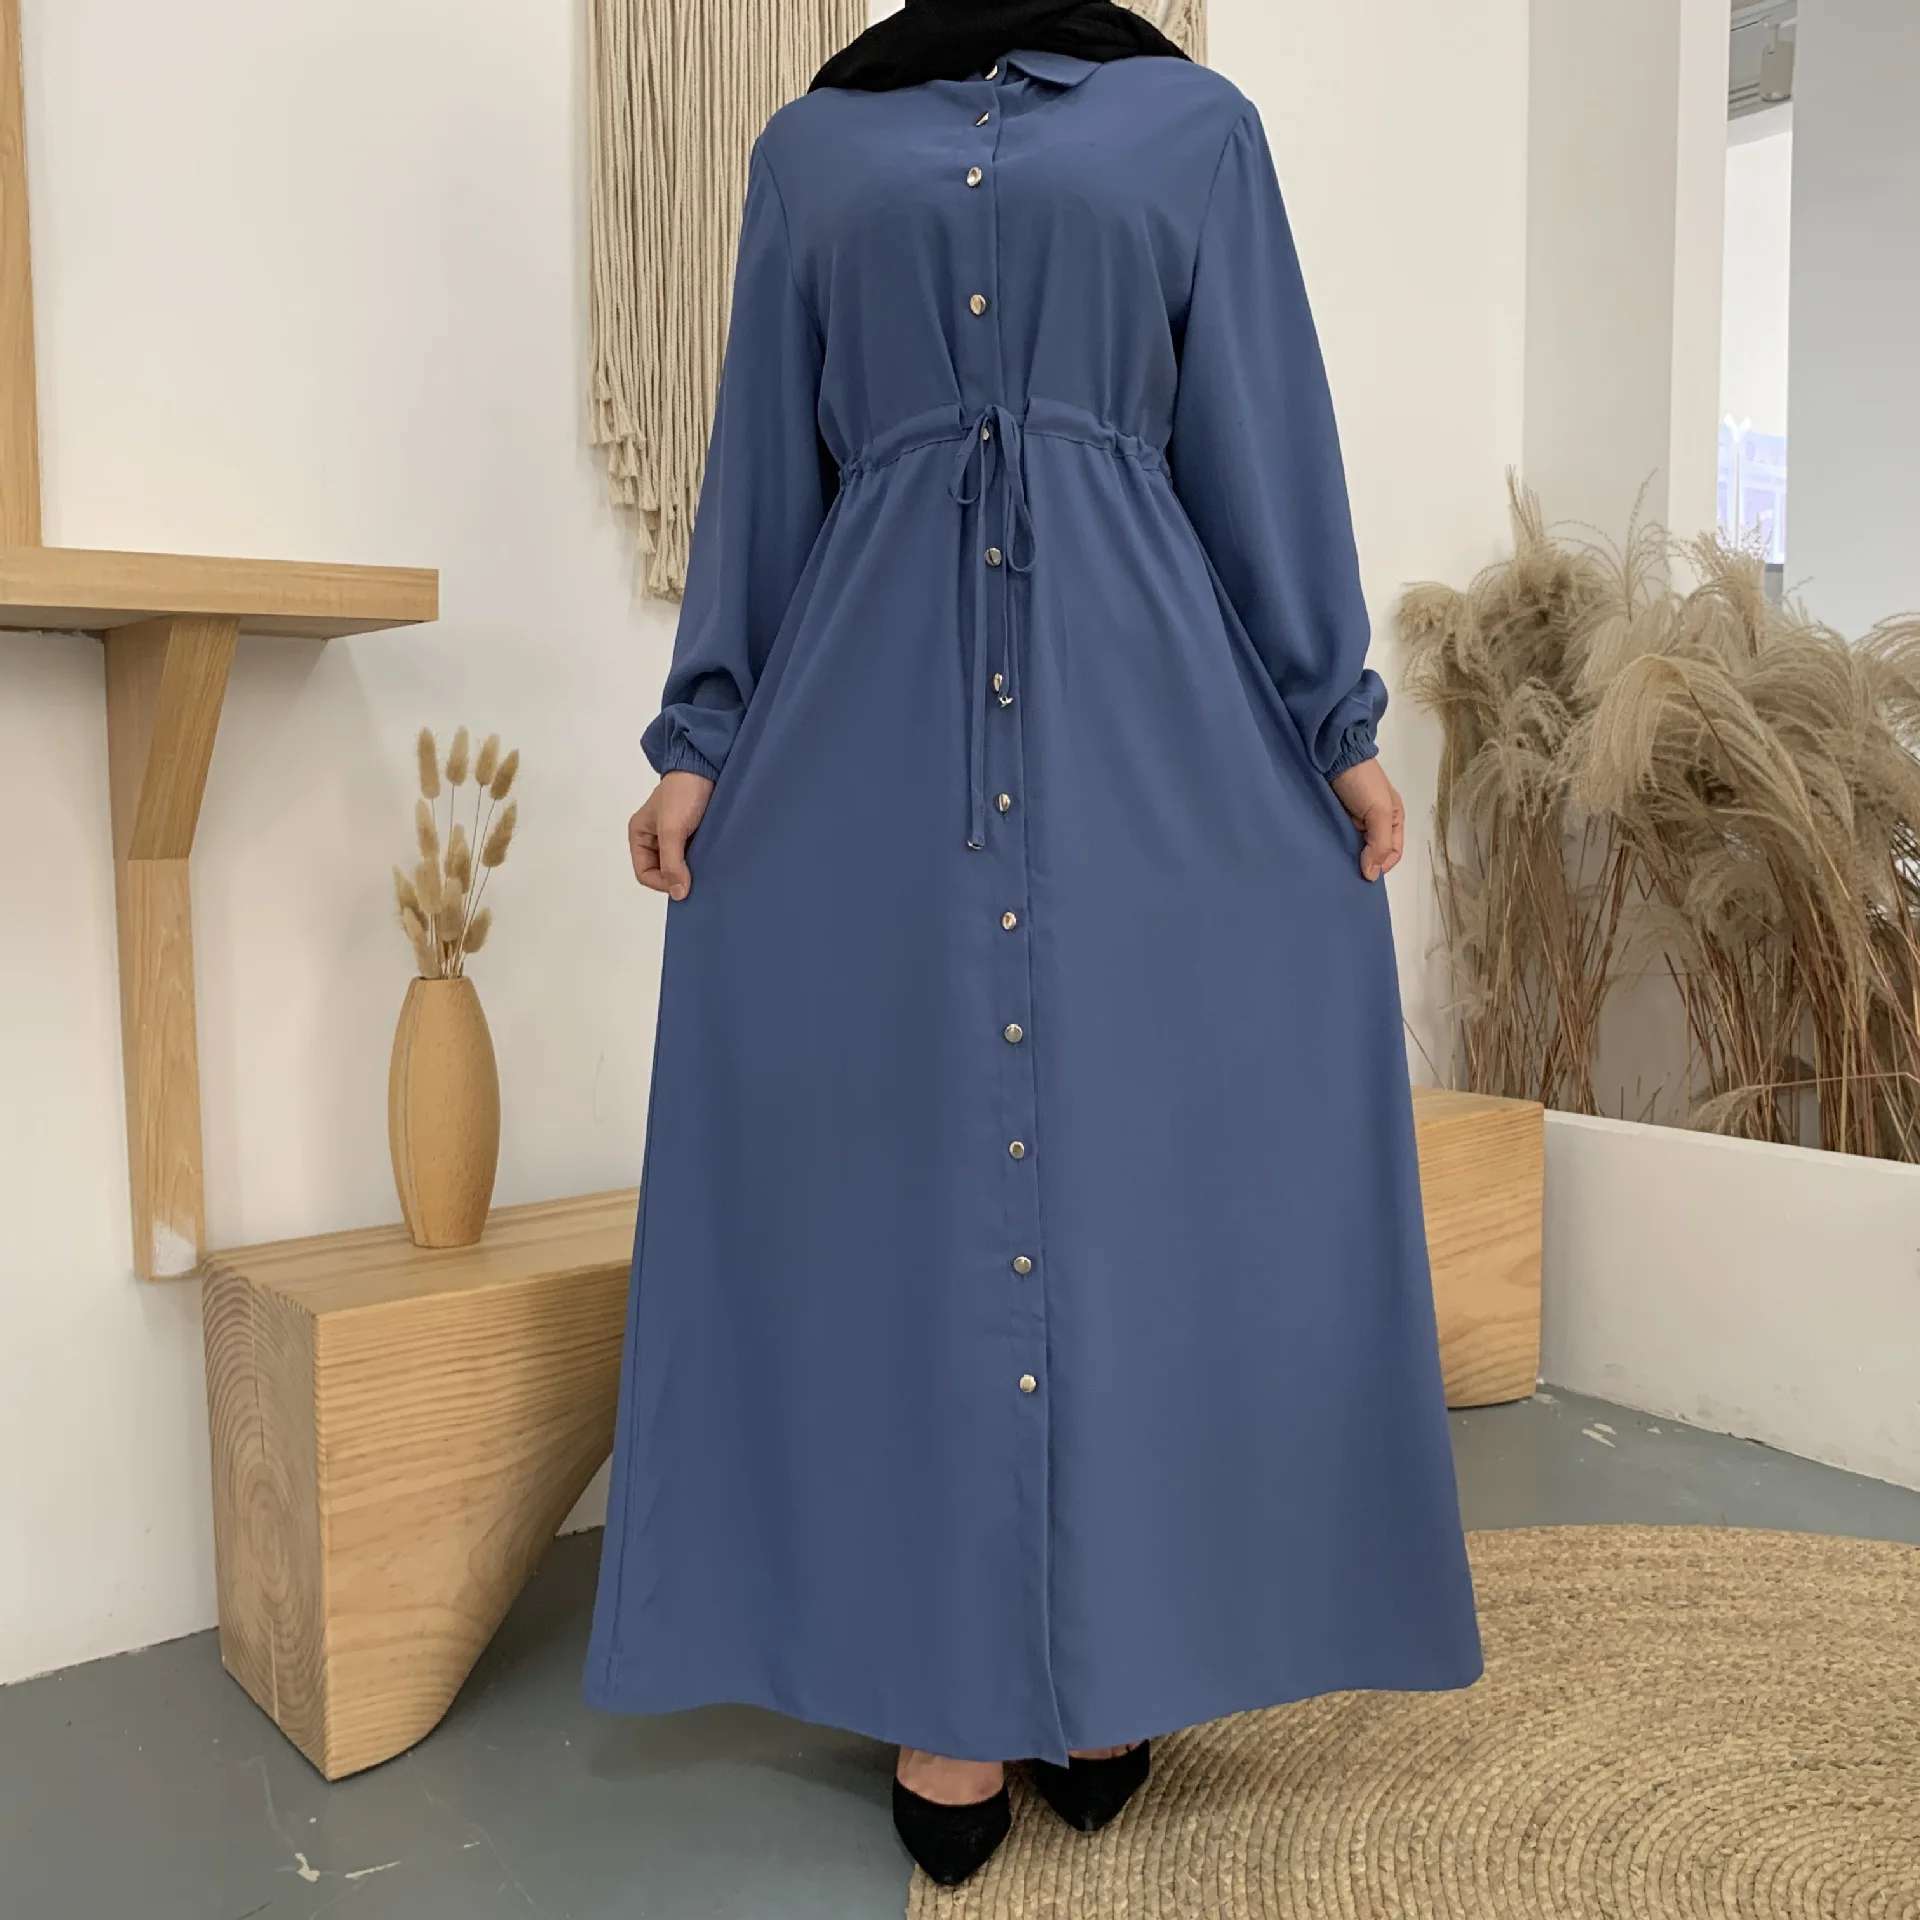 Women's Dubai Abaya Turkey Muslim Fashion Long Dress Lapel Kaftan Muslim Abayas Islam Clothing African Maxi Dresses For Women